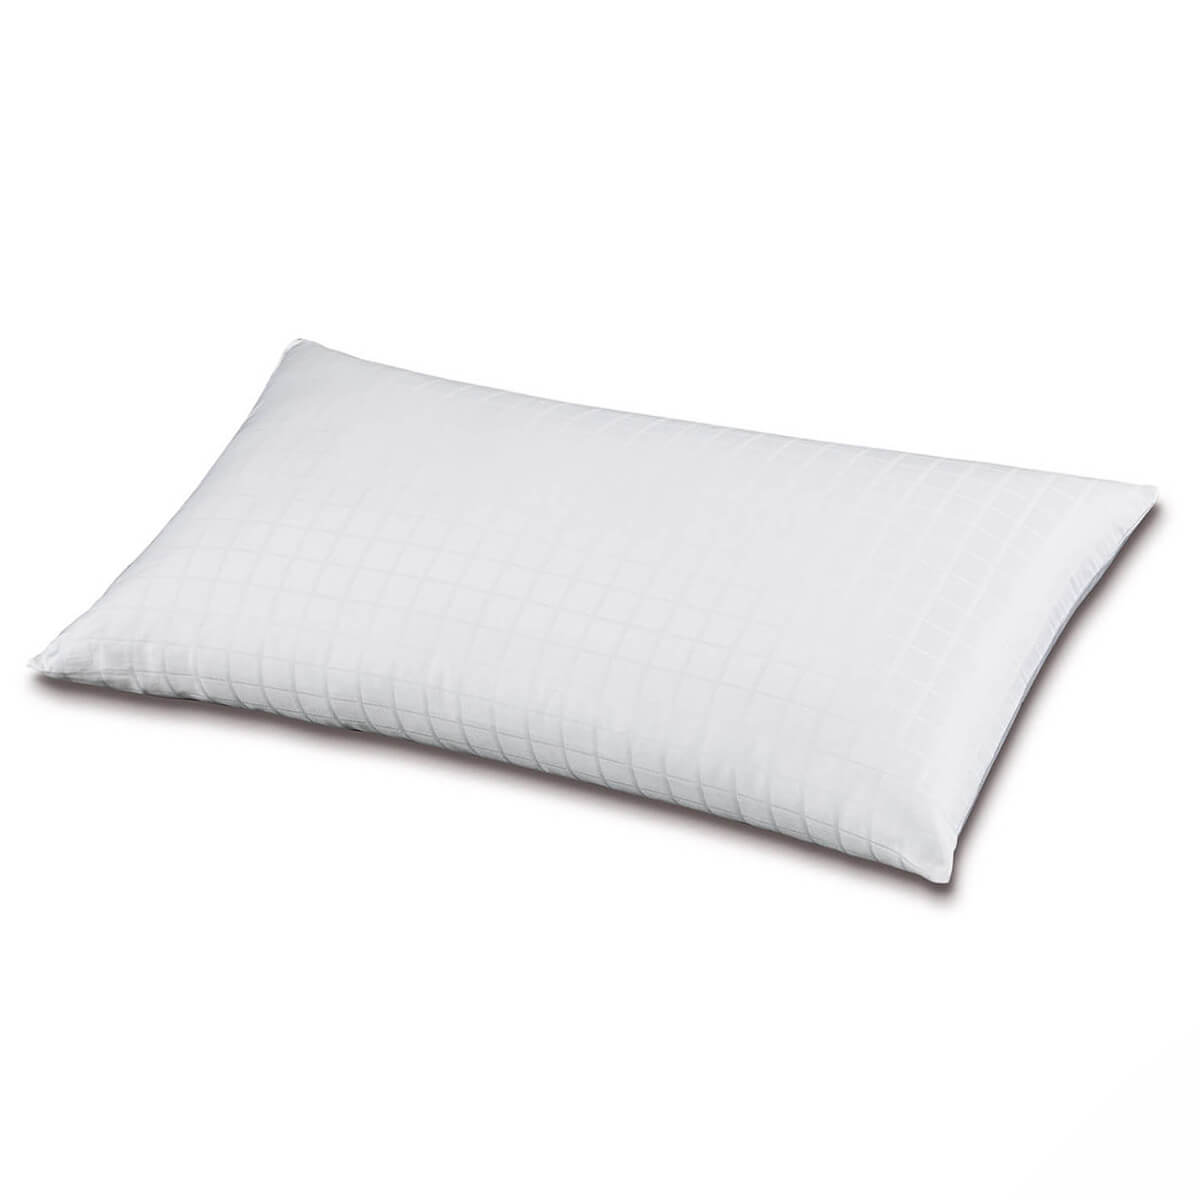 Eco-sustainable Anti-mite Fiber Pillow. HIGH firmness